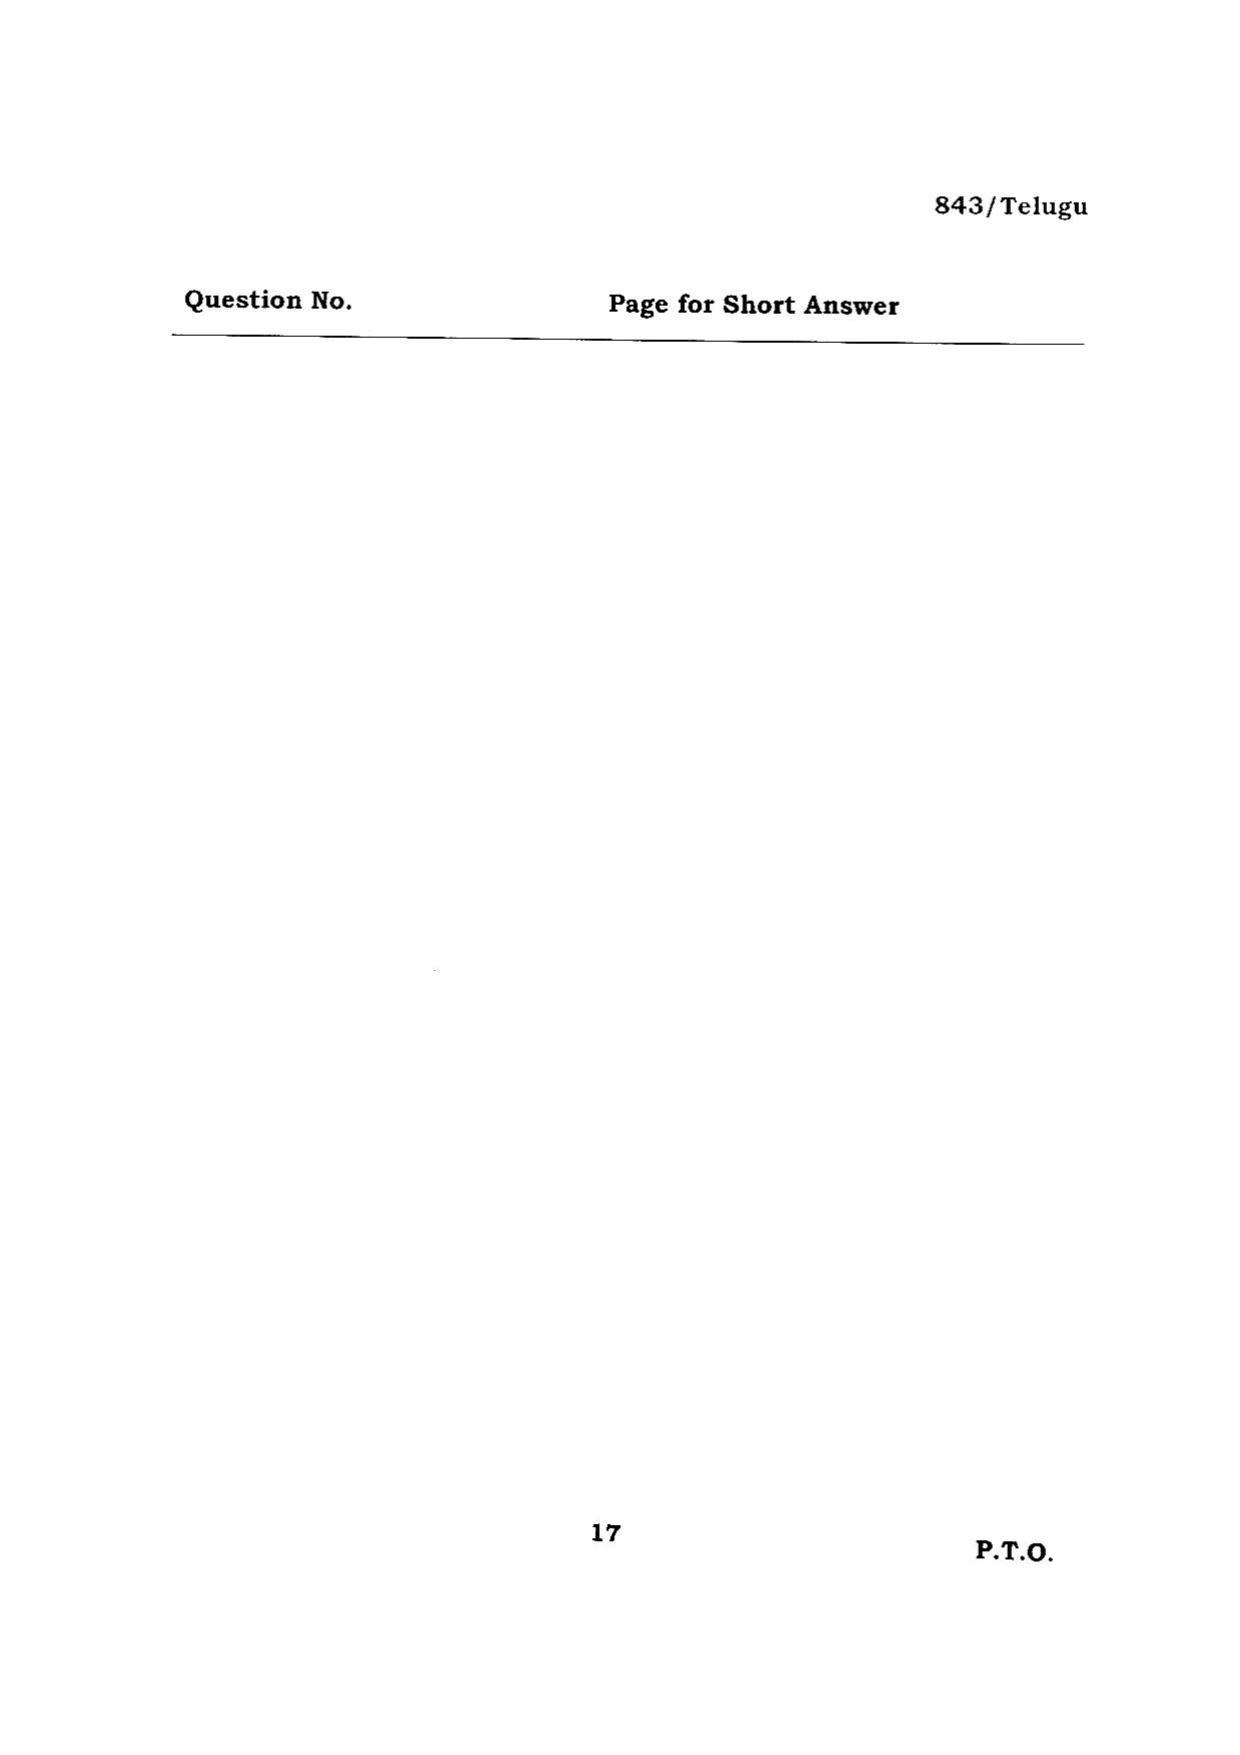 BHU RET TELUGU 2015 Question Paper - Page 17